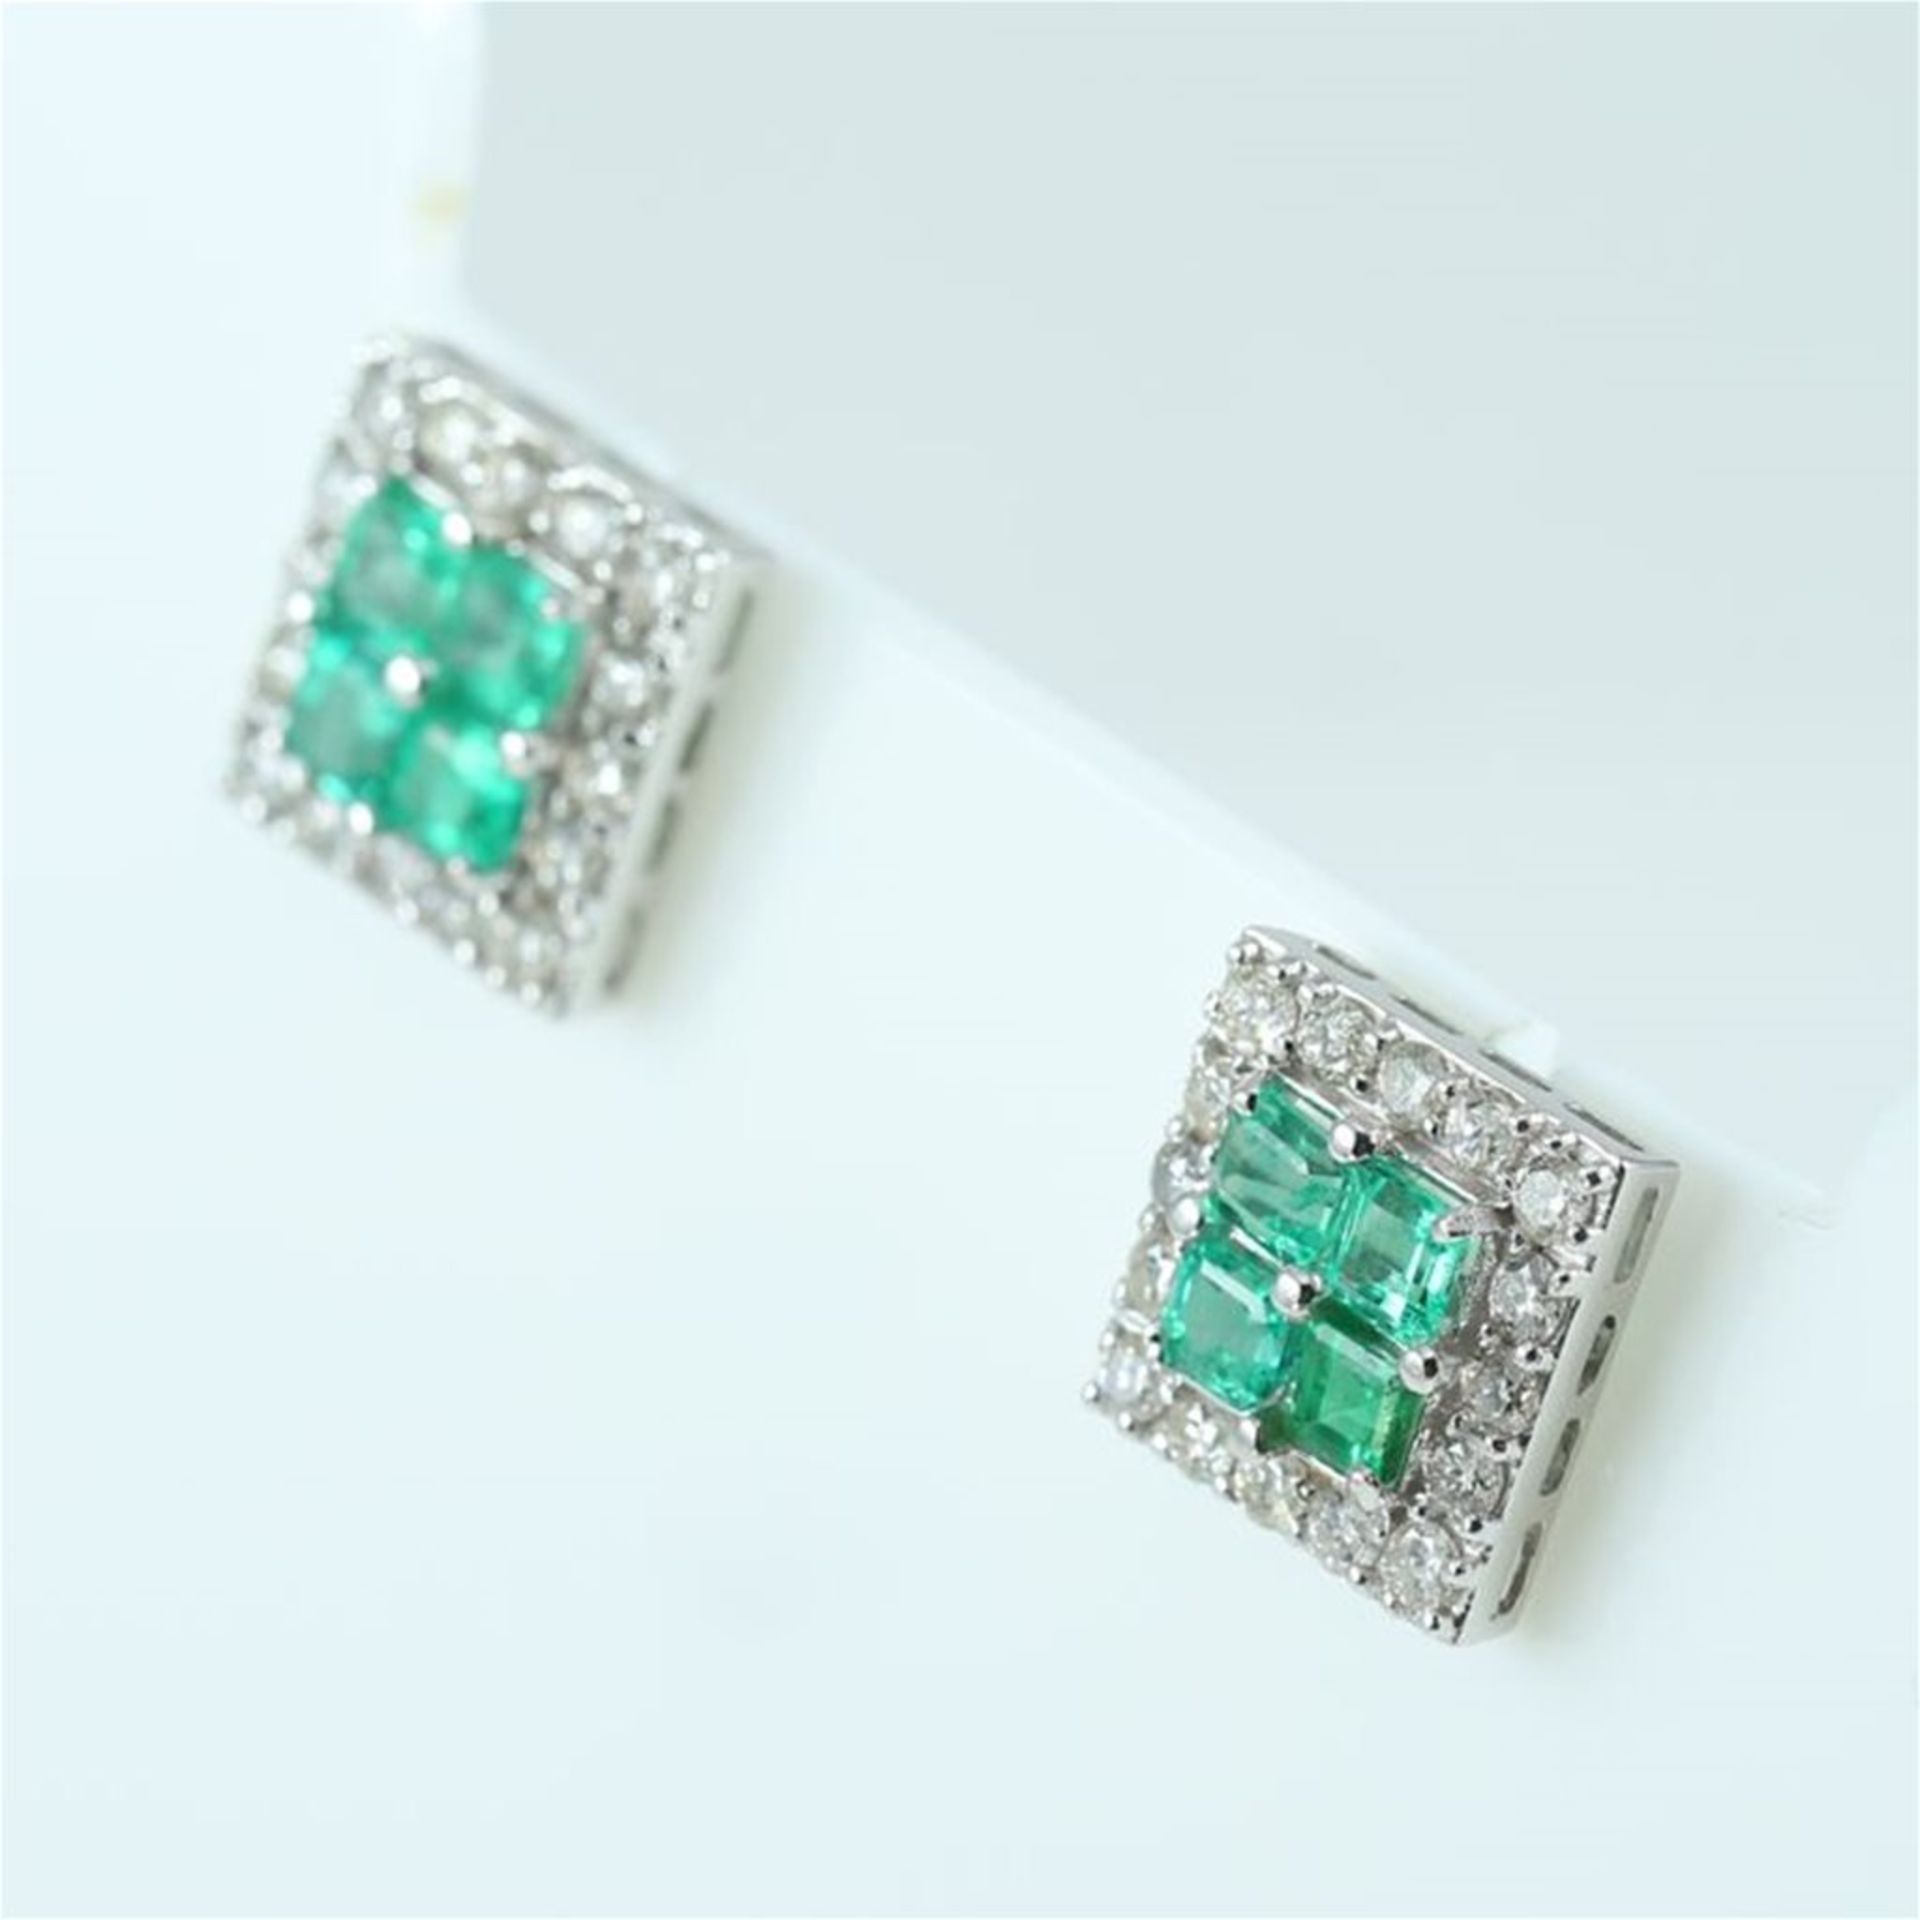 IGI Certified 14 K / 545 White Gold Diamond and Emerald Earrings - Image 3 of 4